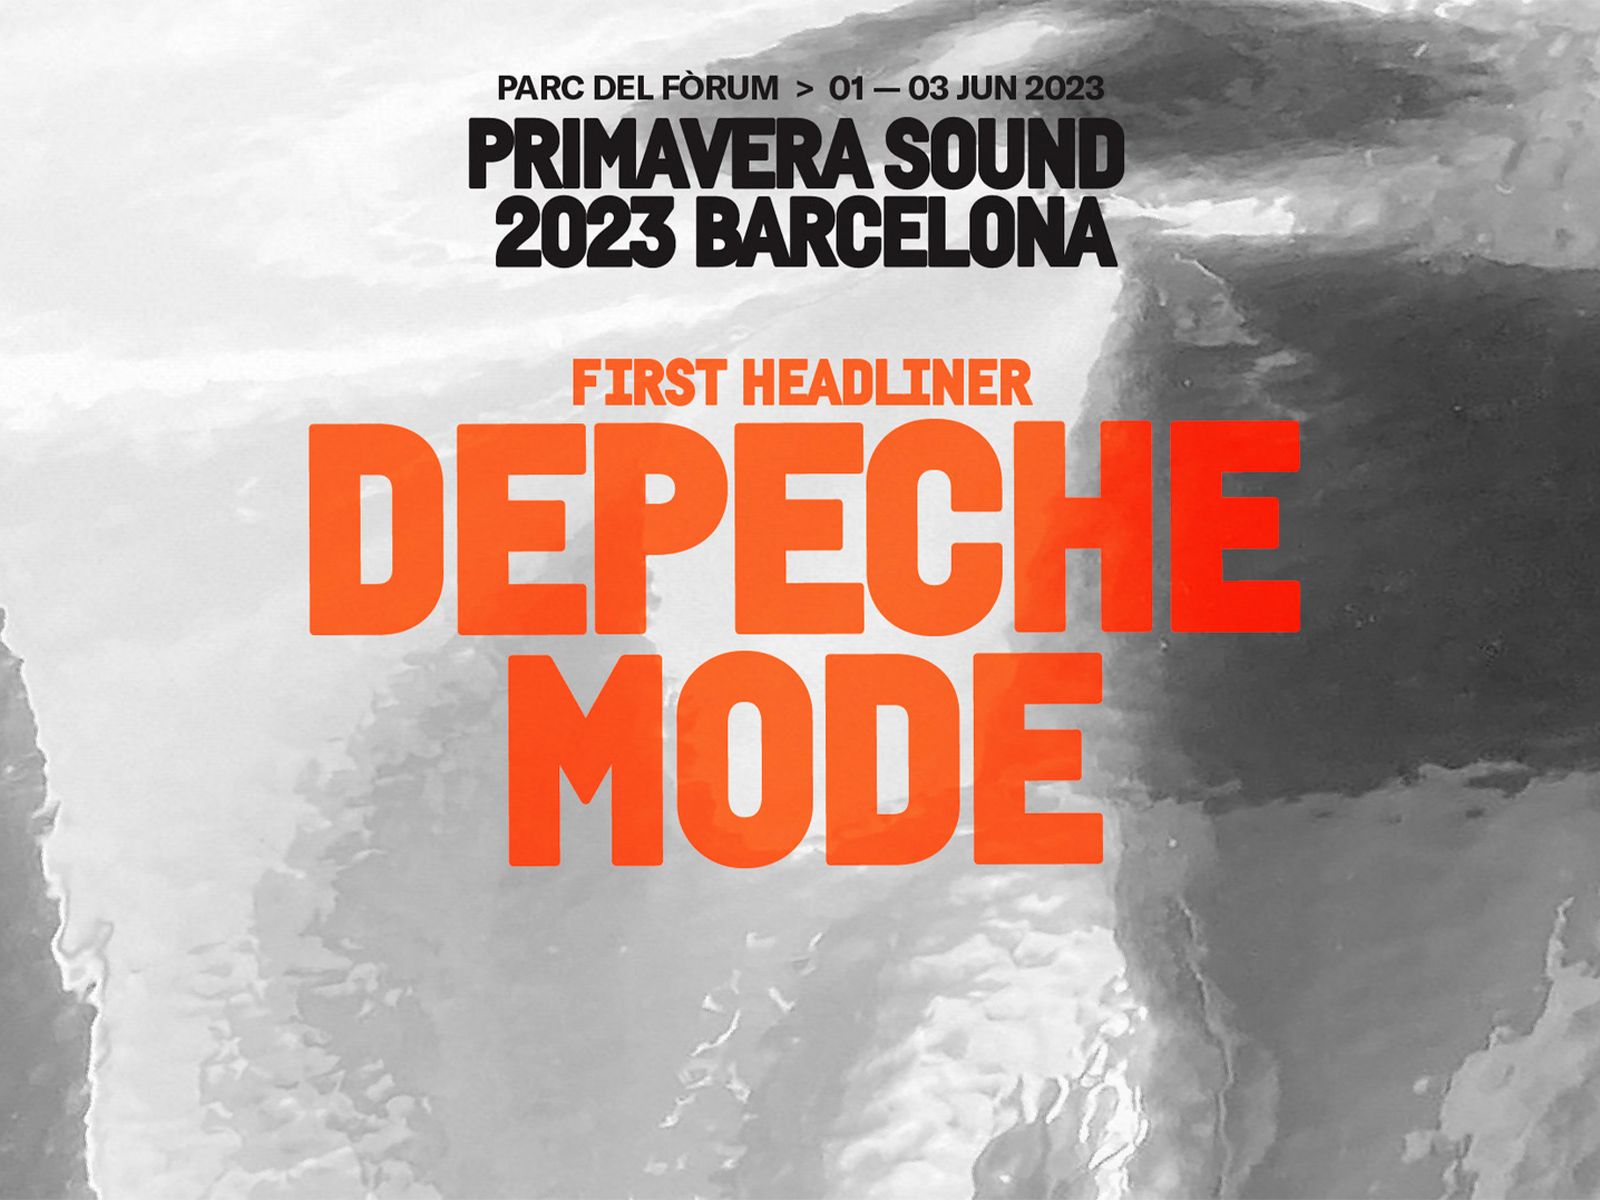 Depeche Mode, first headliner of Primavera Sound Barcelona and Madrid 2023